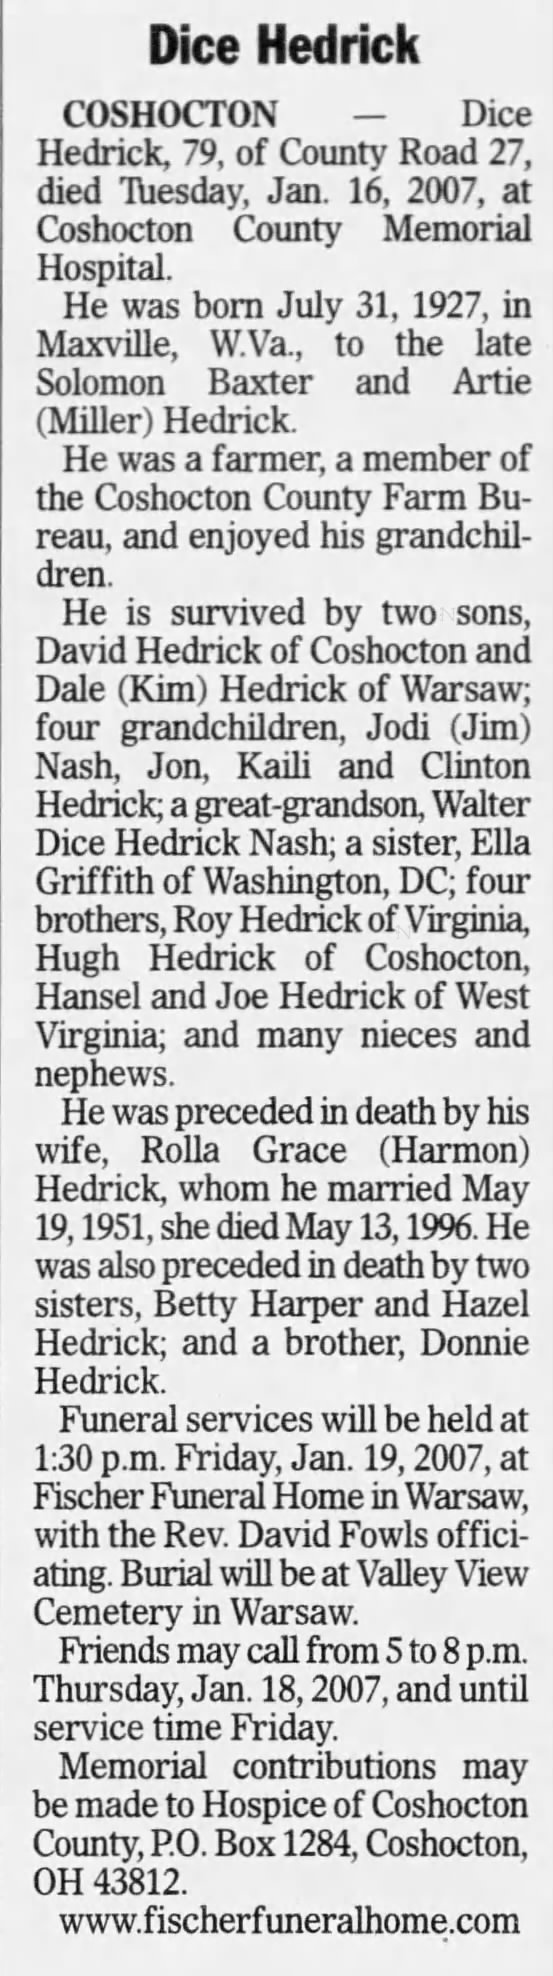 Dice Baxter Hedrick obituary